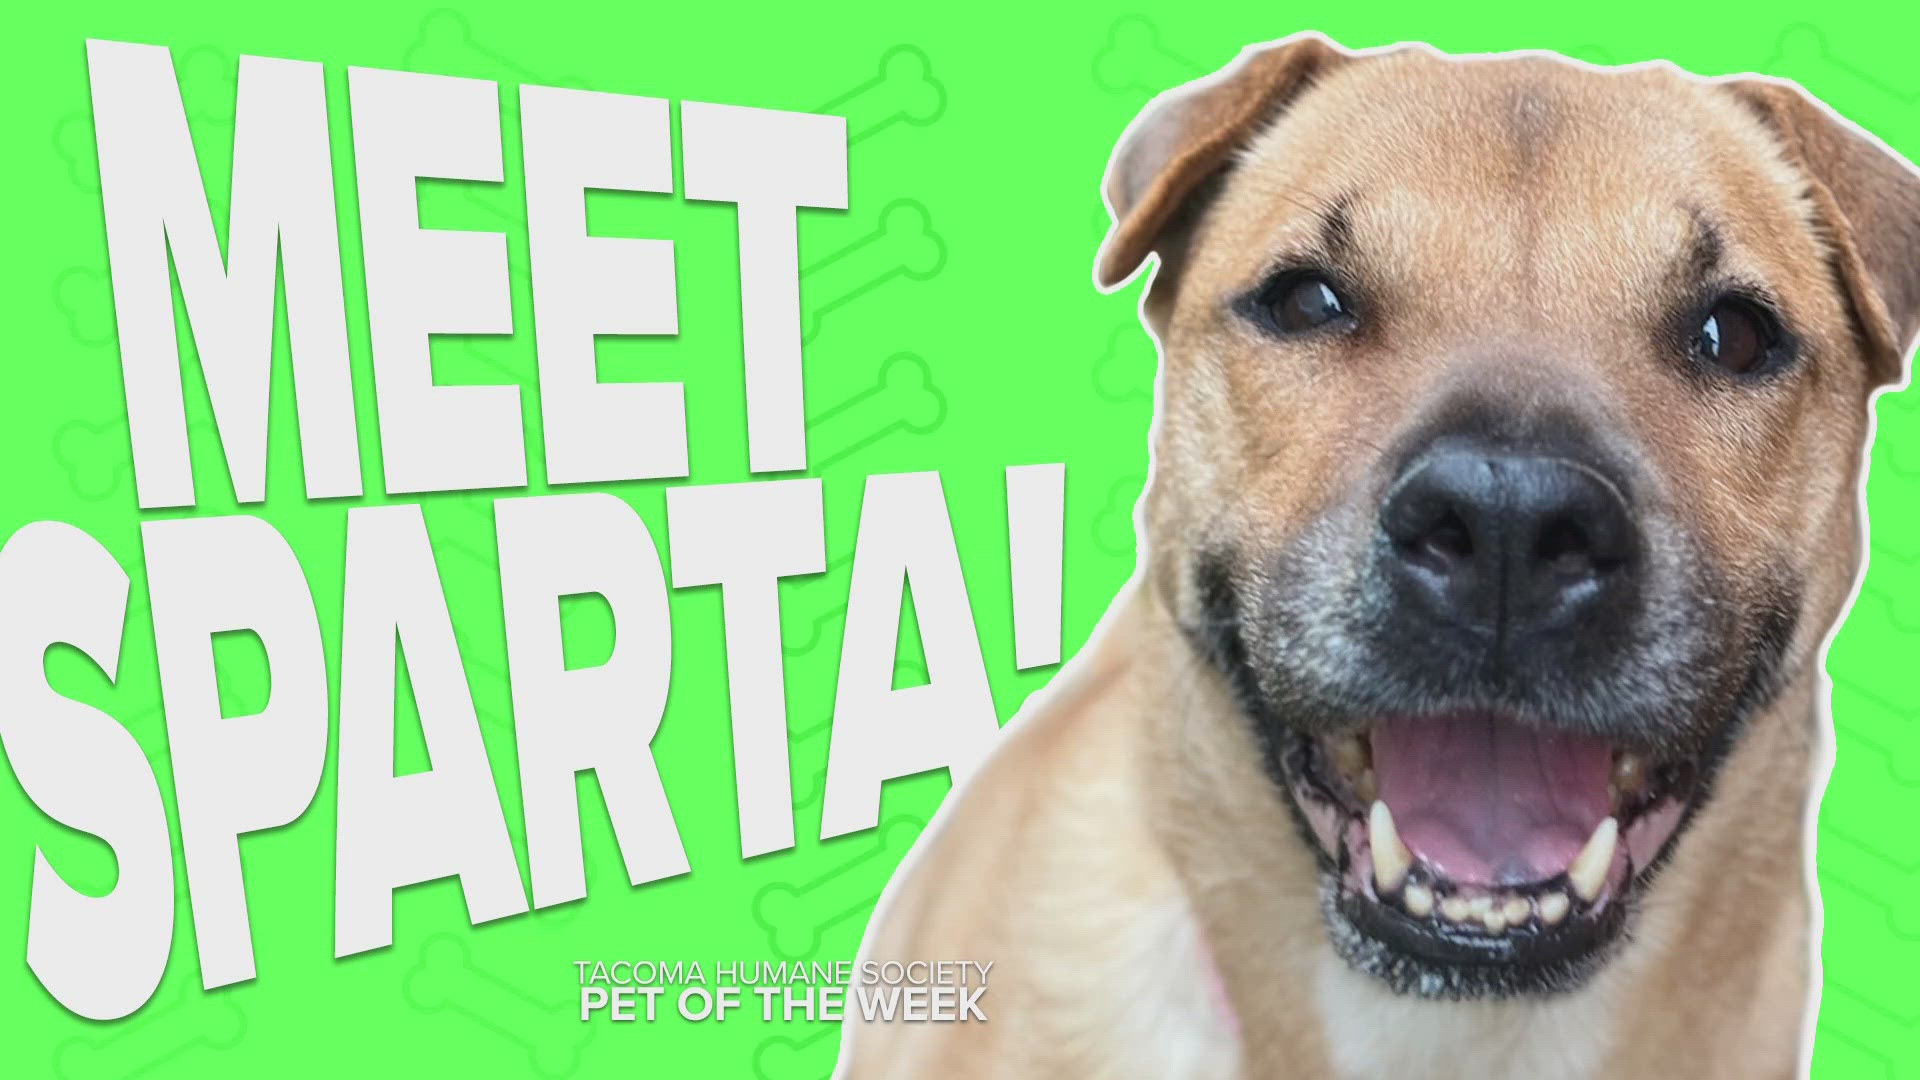 This week's adoptable pet is Sparta.